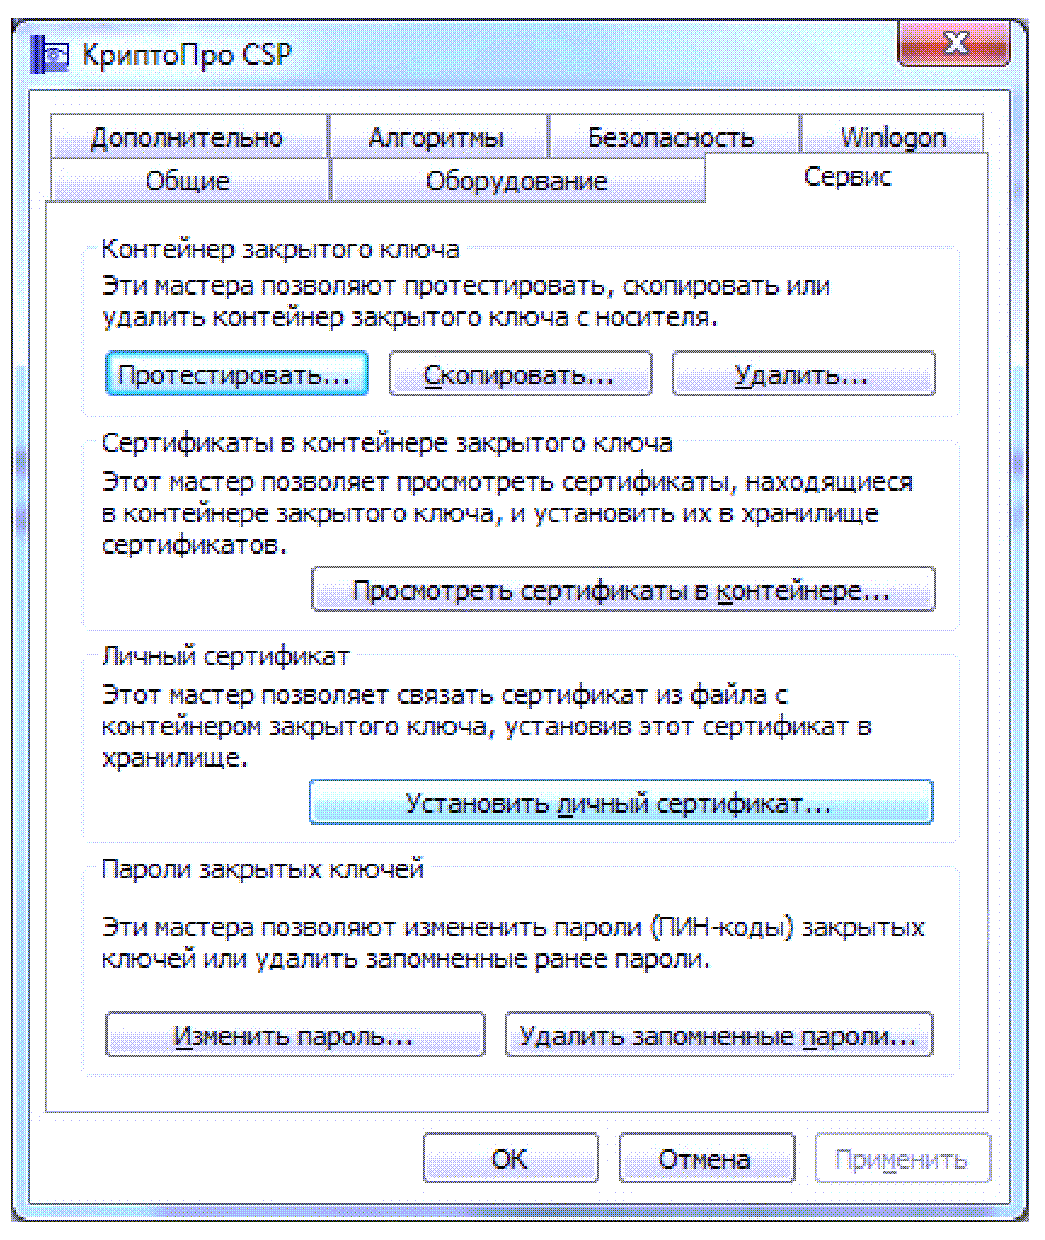 Cryptopro ru products csp downloads. КРИПТОПРО. КРИПТОПРО CSP. Установка КРИПТОПРО CSP. КРИПТОПРО сервис.